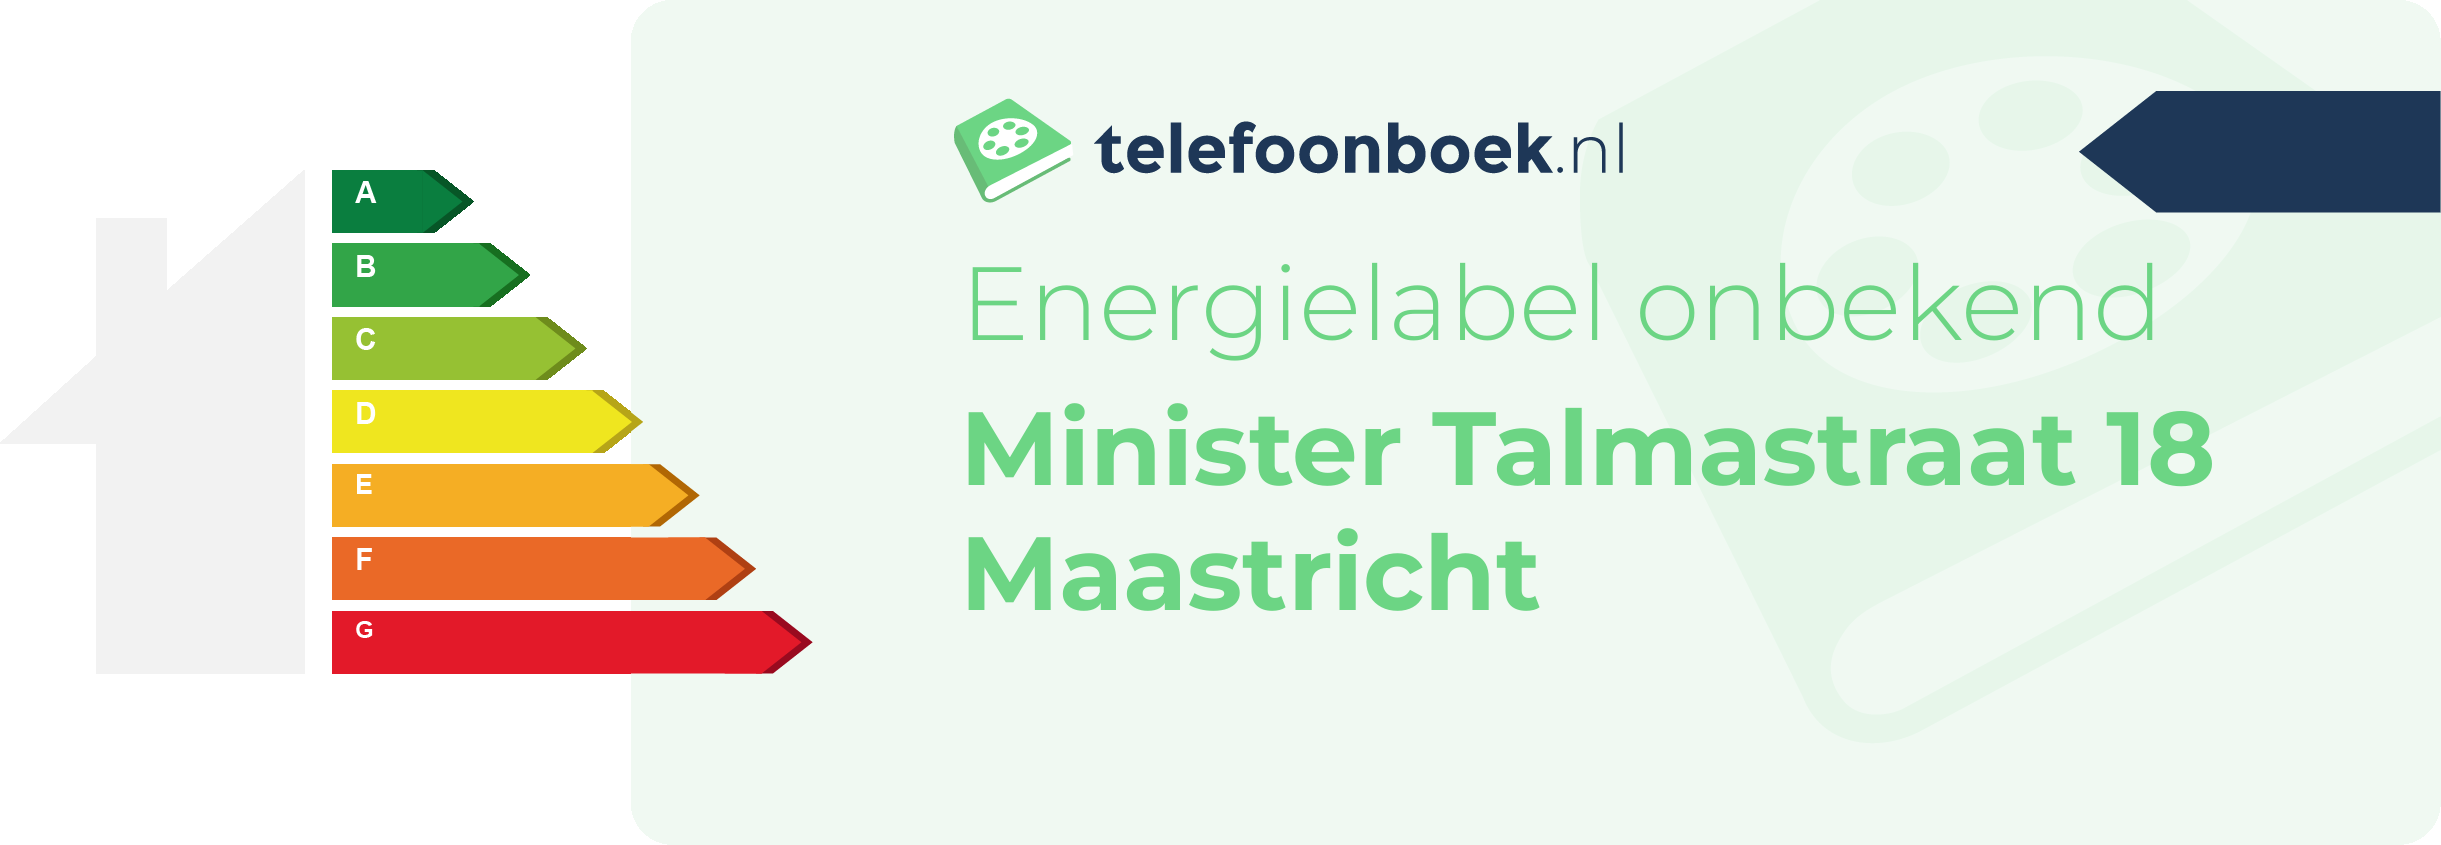 Energielabel Minister Talmastraat 18 Maastricht